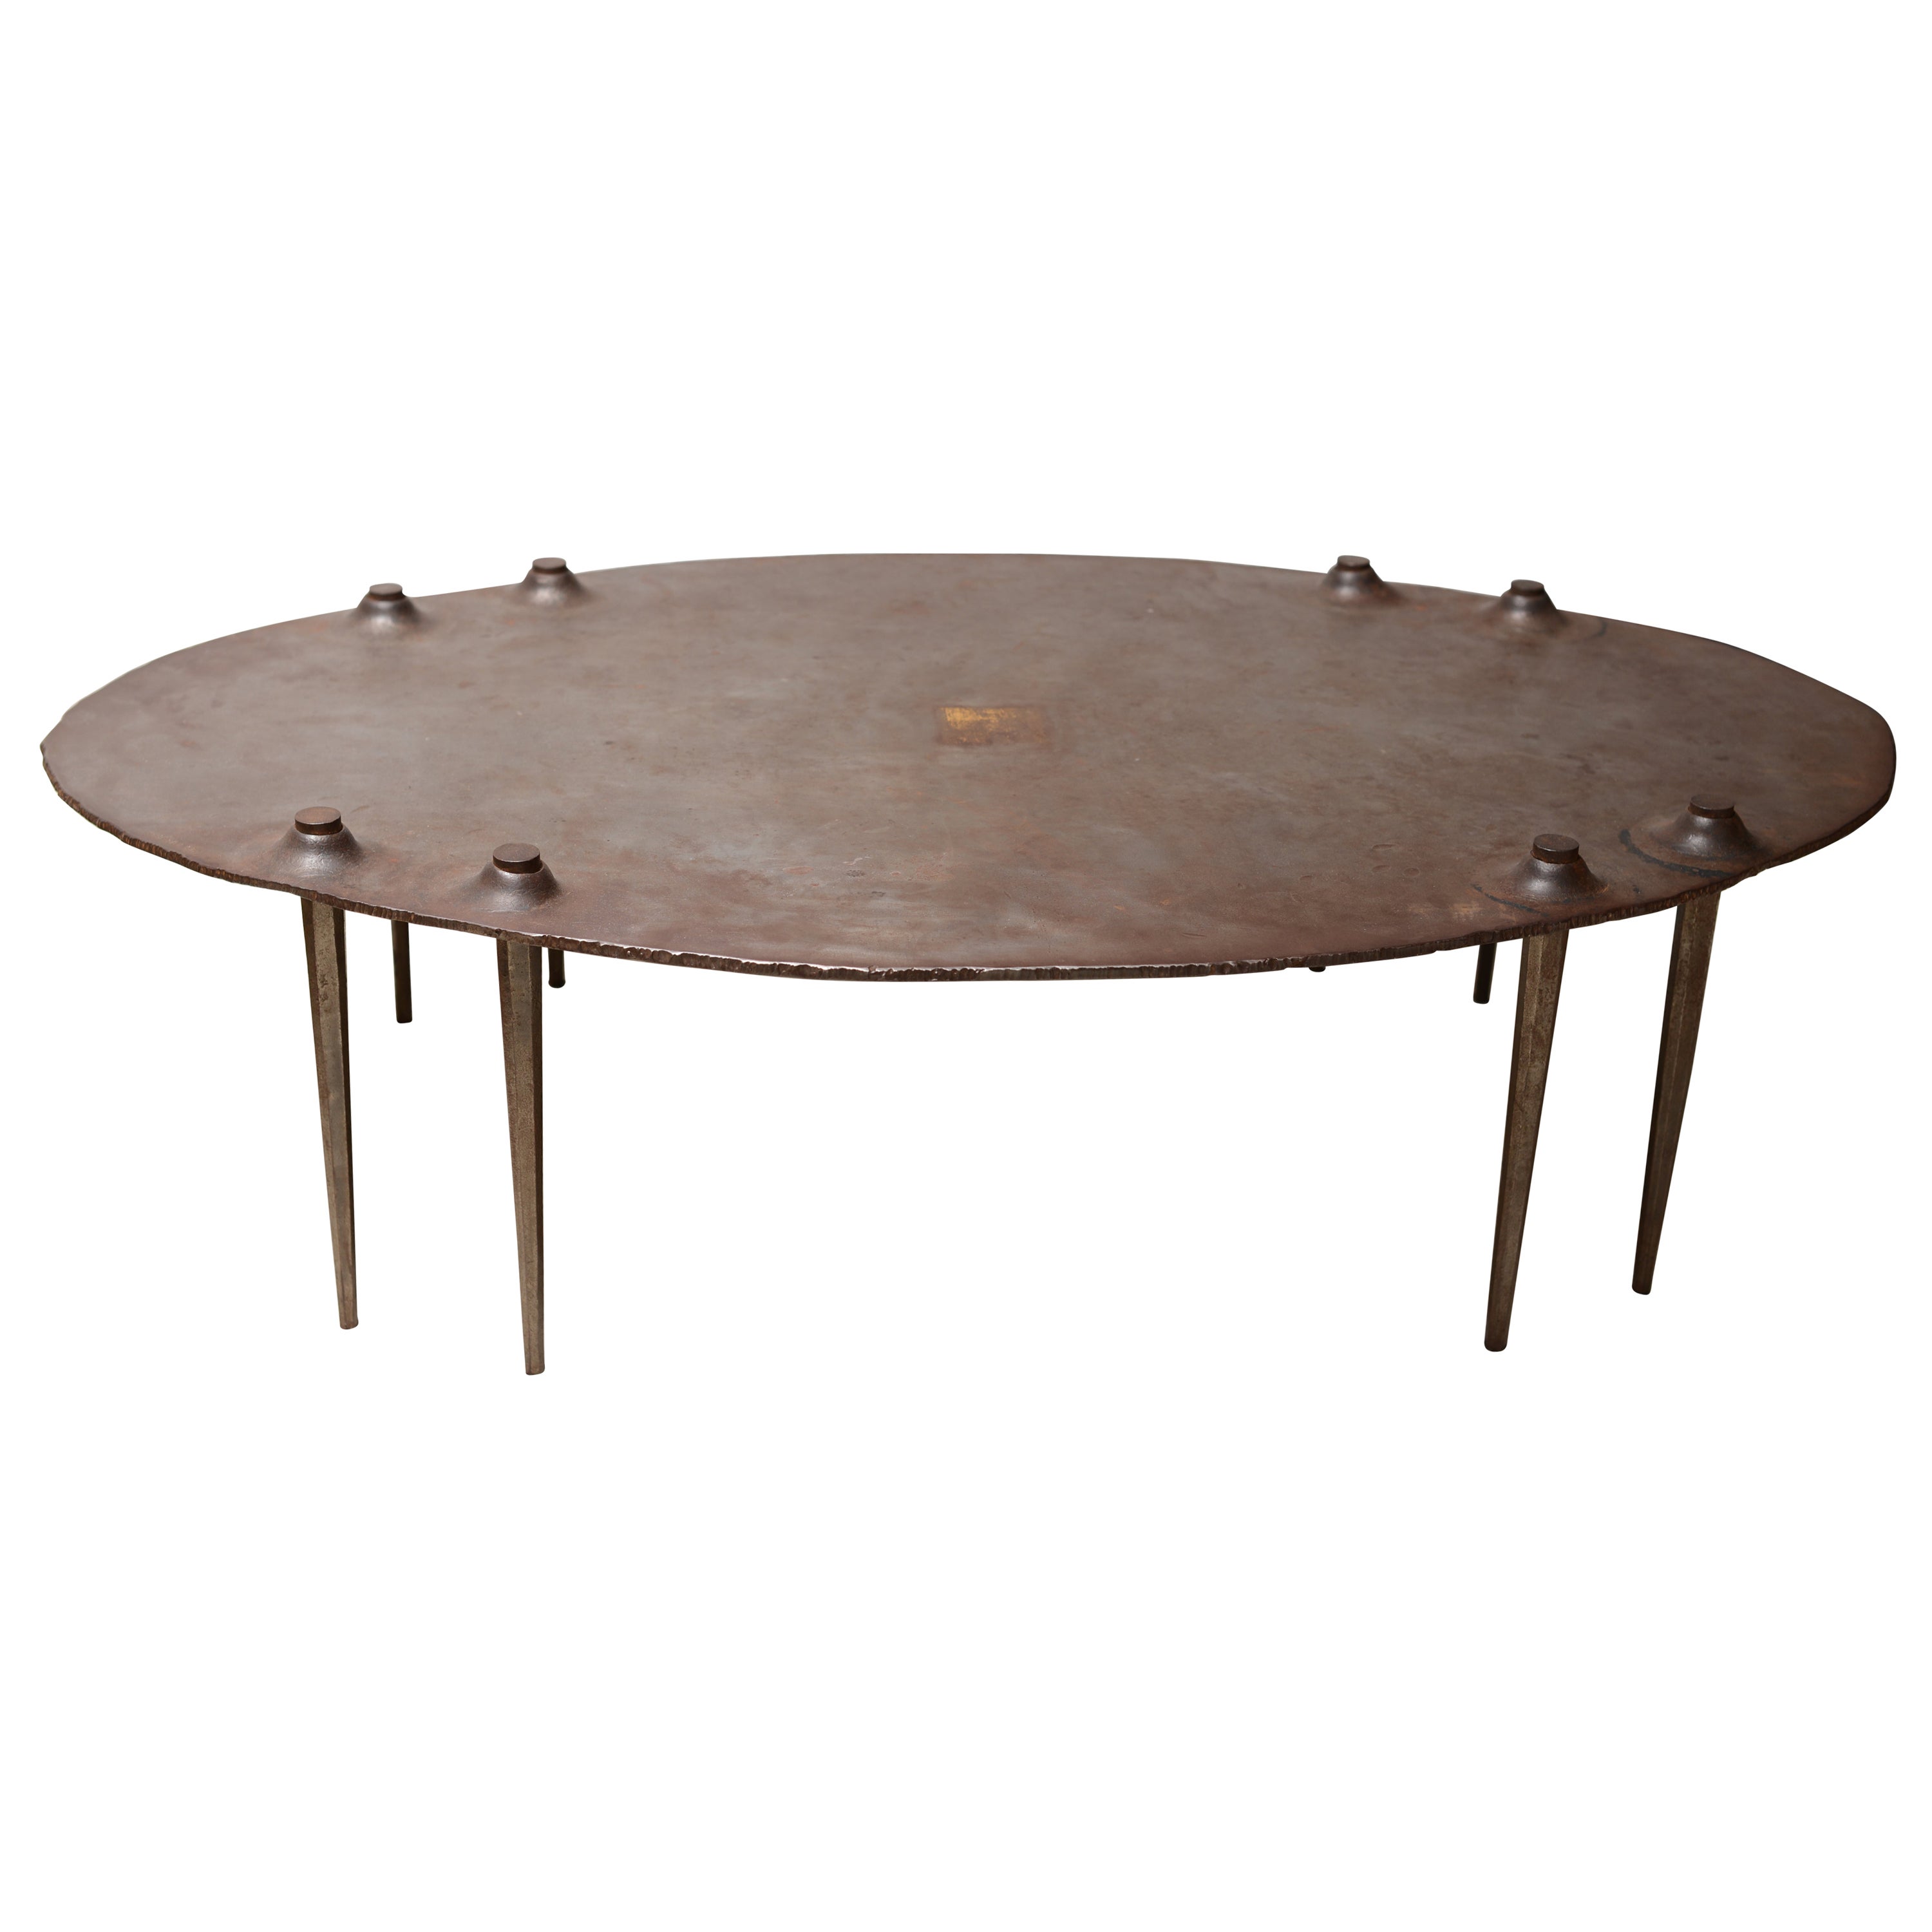 Idir Mecibah, Brutalist Coffee Table in Massive Steel, Handcrafted in Belgium 97 For Sale